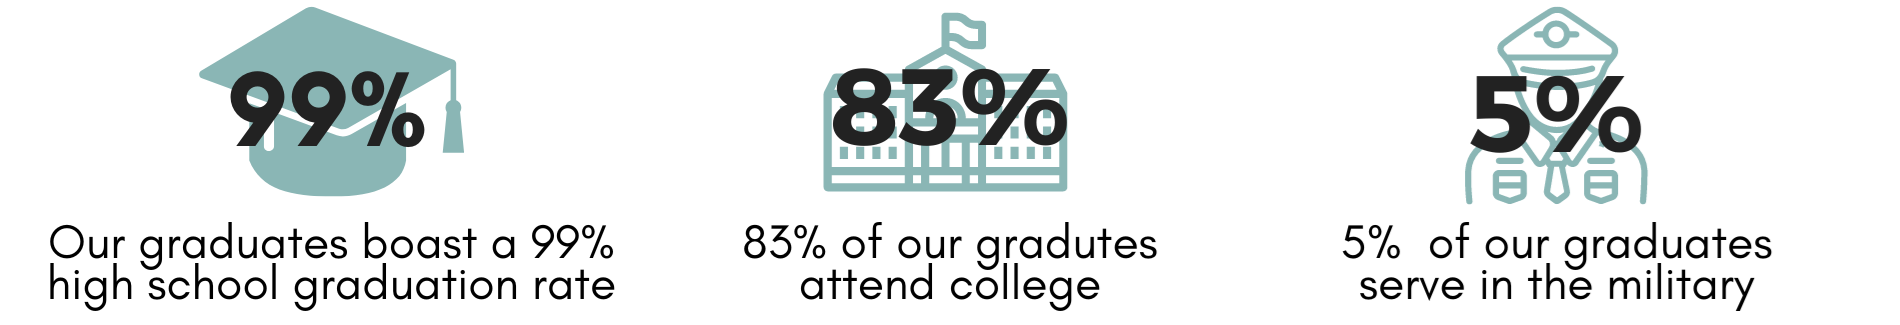 Graduate Support Statistics